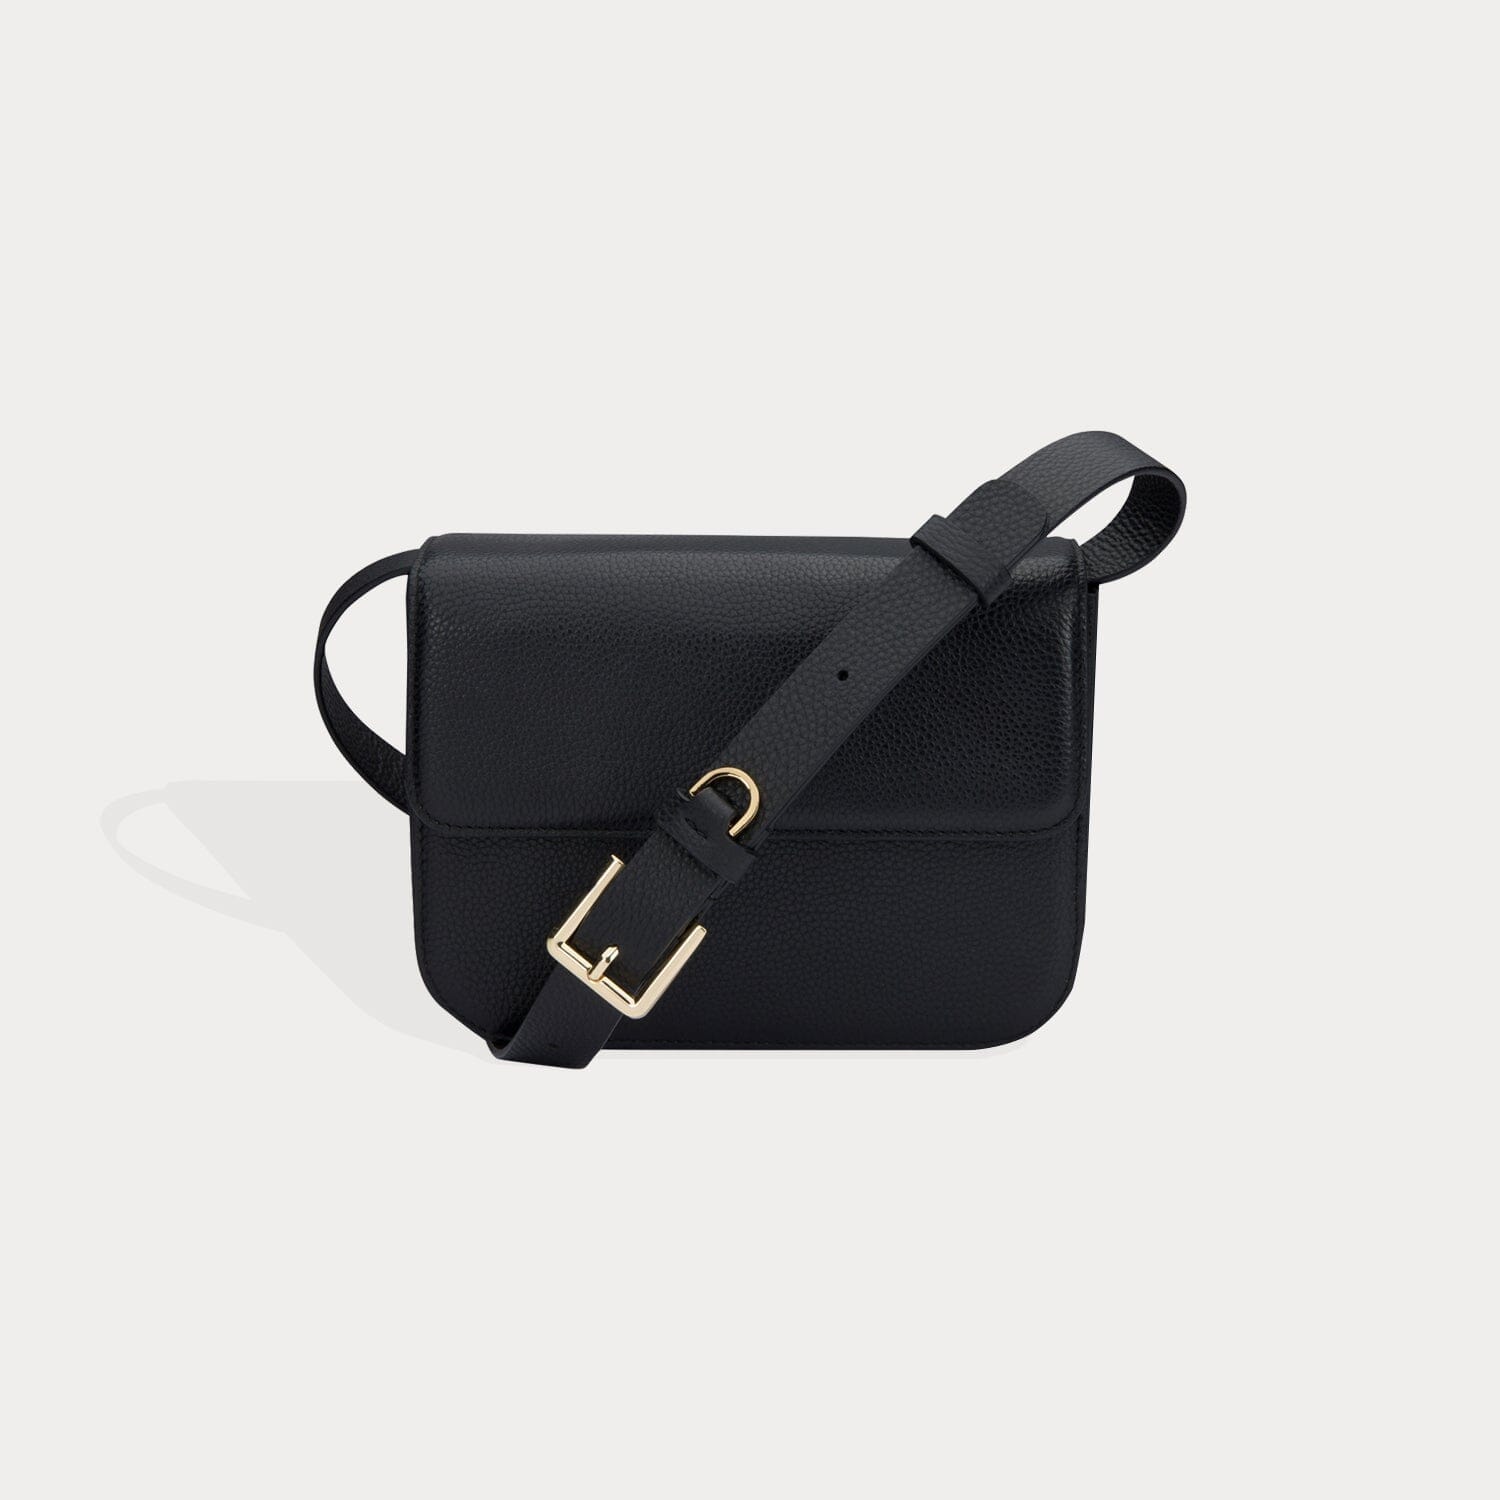 Bag Strap for Women Purse Handbag,Silver,Gold Hardware,Adjustable Strap for  Crossbody Bags,Cross Body Belt for Shoulder Bags